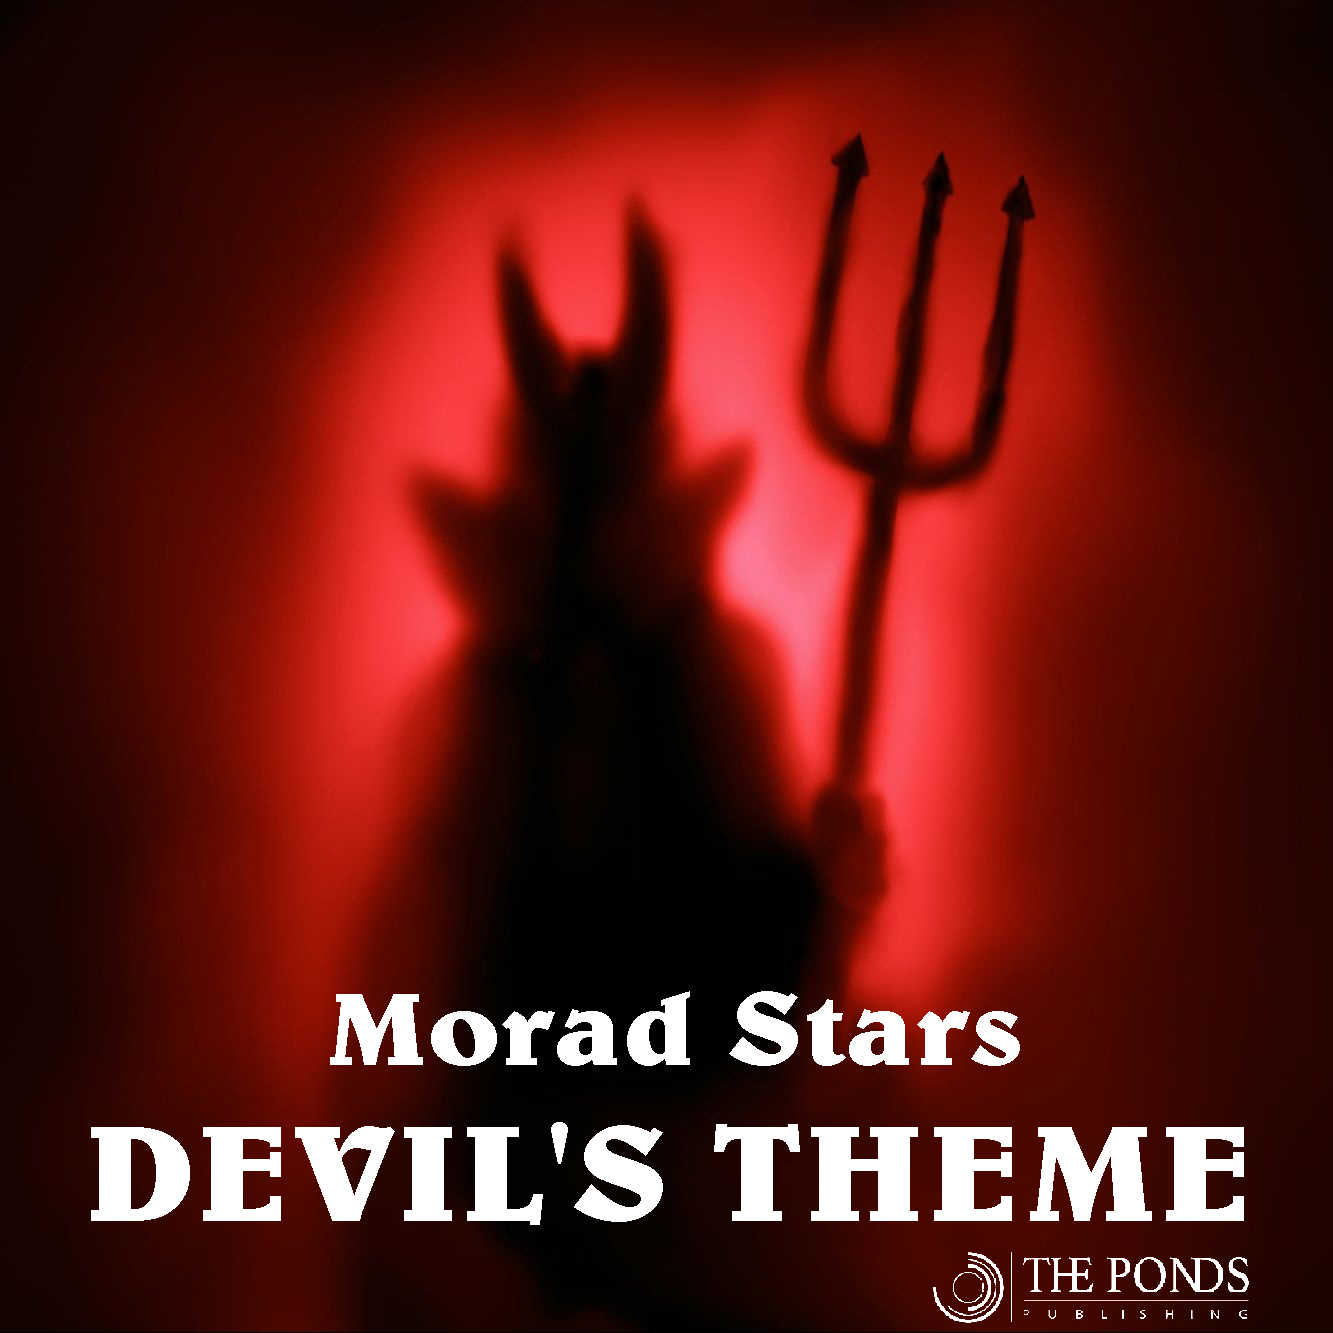 Morad Stars - Tonight